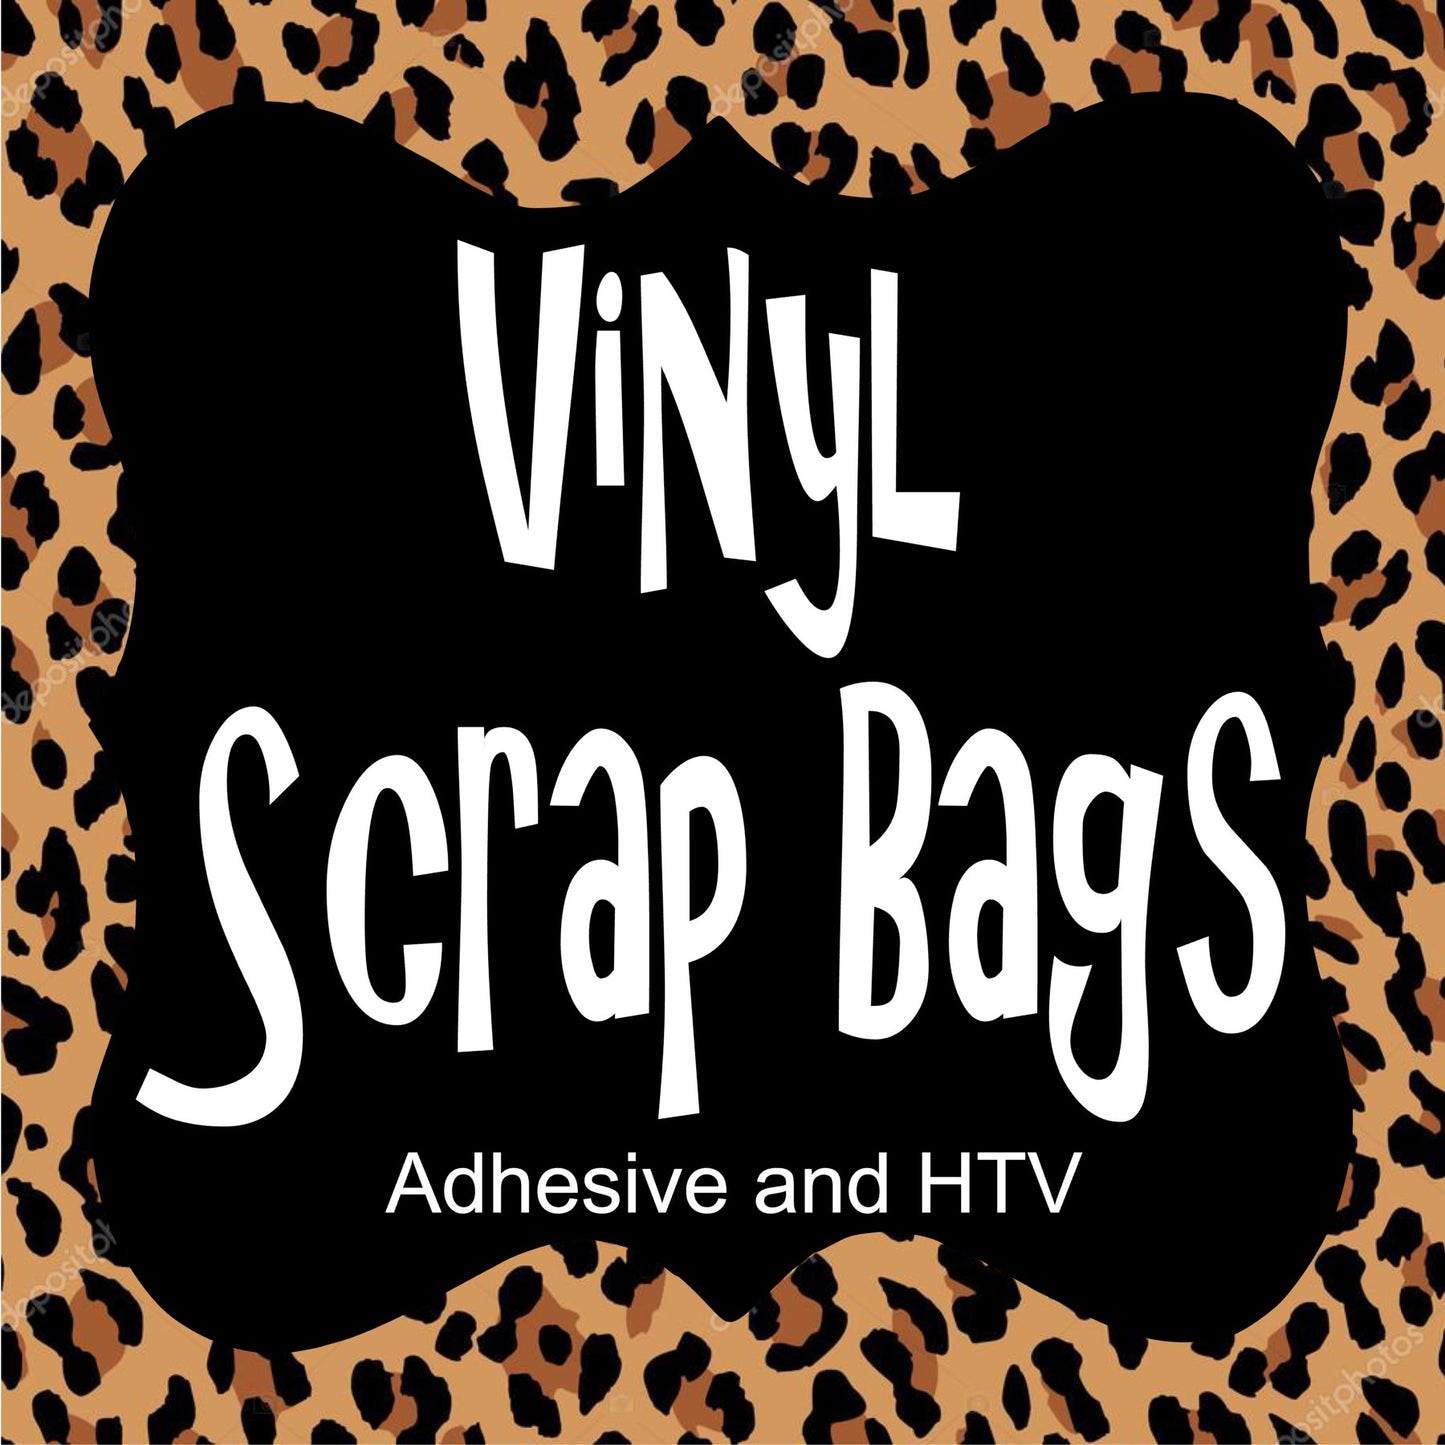 Scrap Bags HTV and ADHESIVE